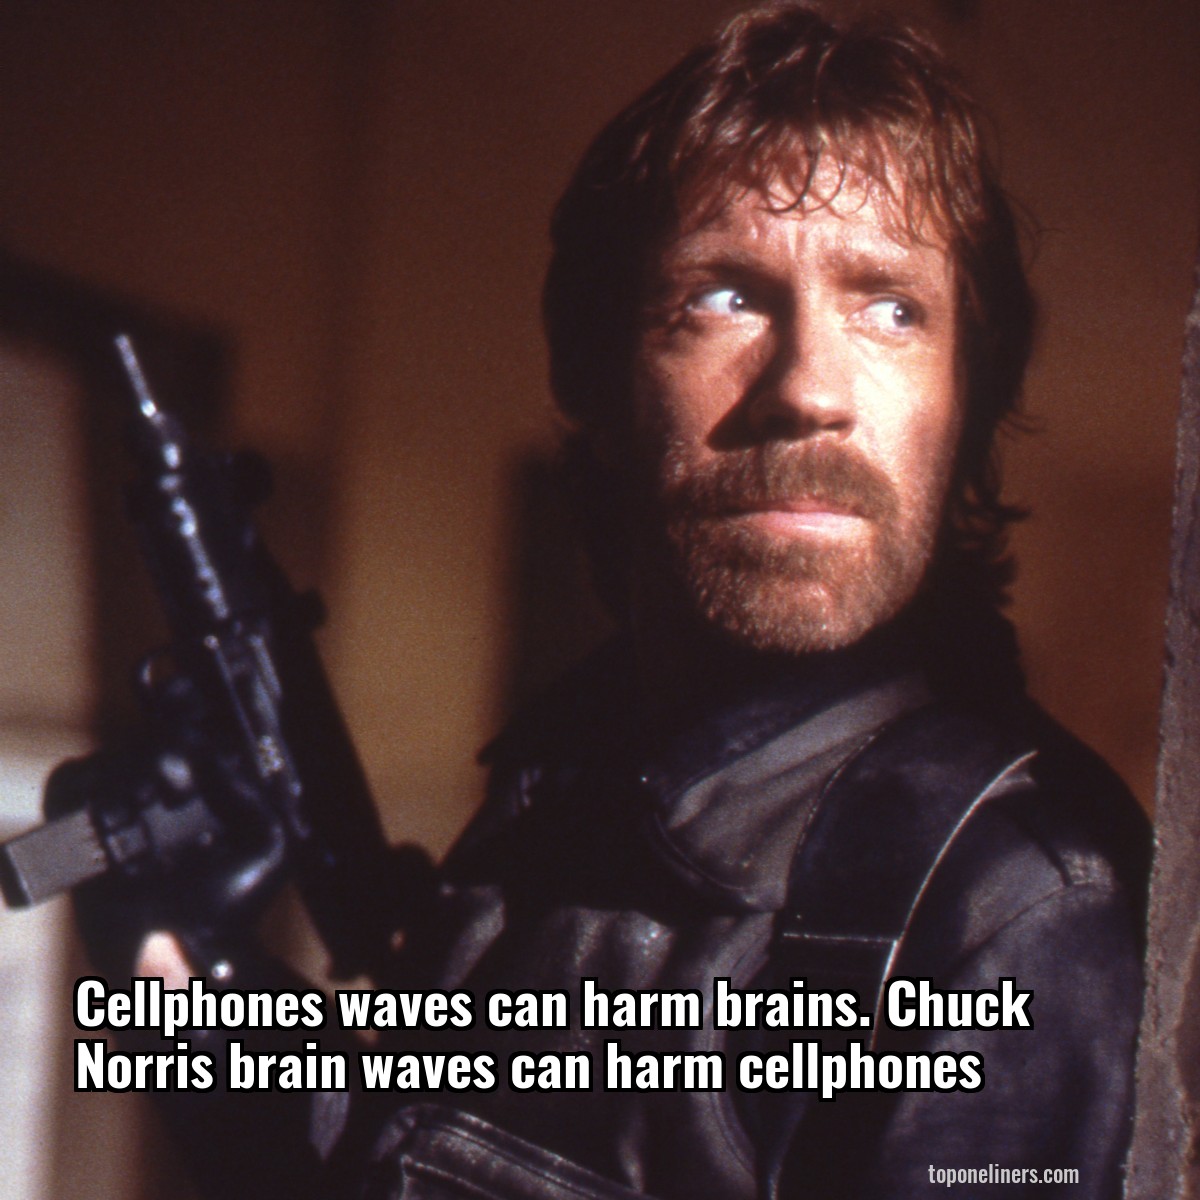 Cellphones waves can harm brains. Chuck Norris brain waves can harm cellphones